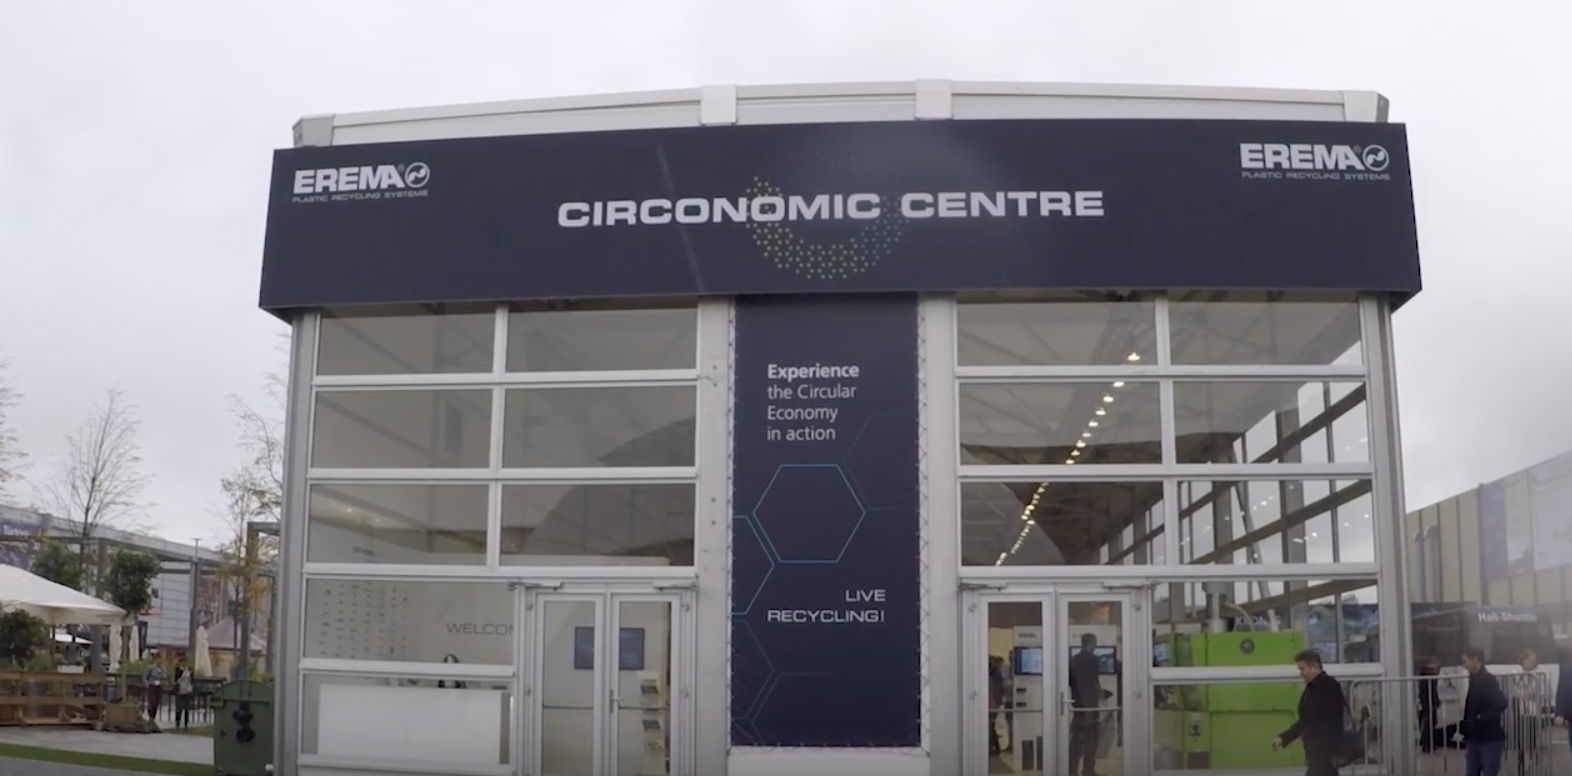 Circular Economy - Cerconomic Center - K 2019 Show